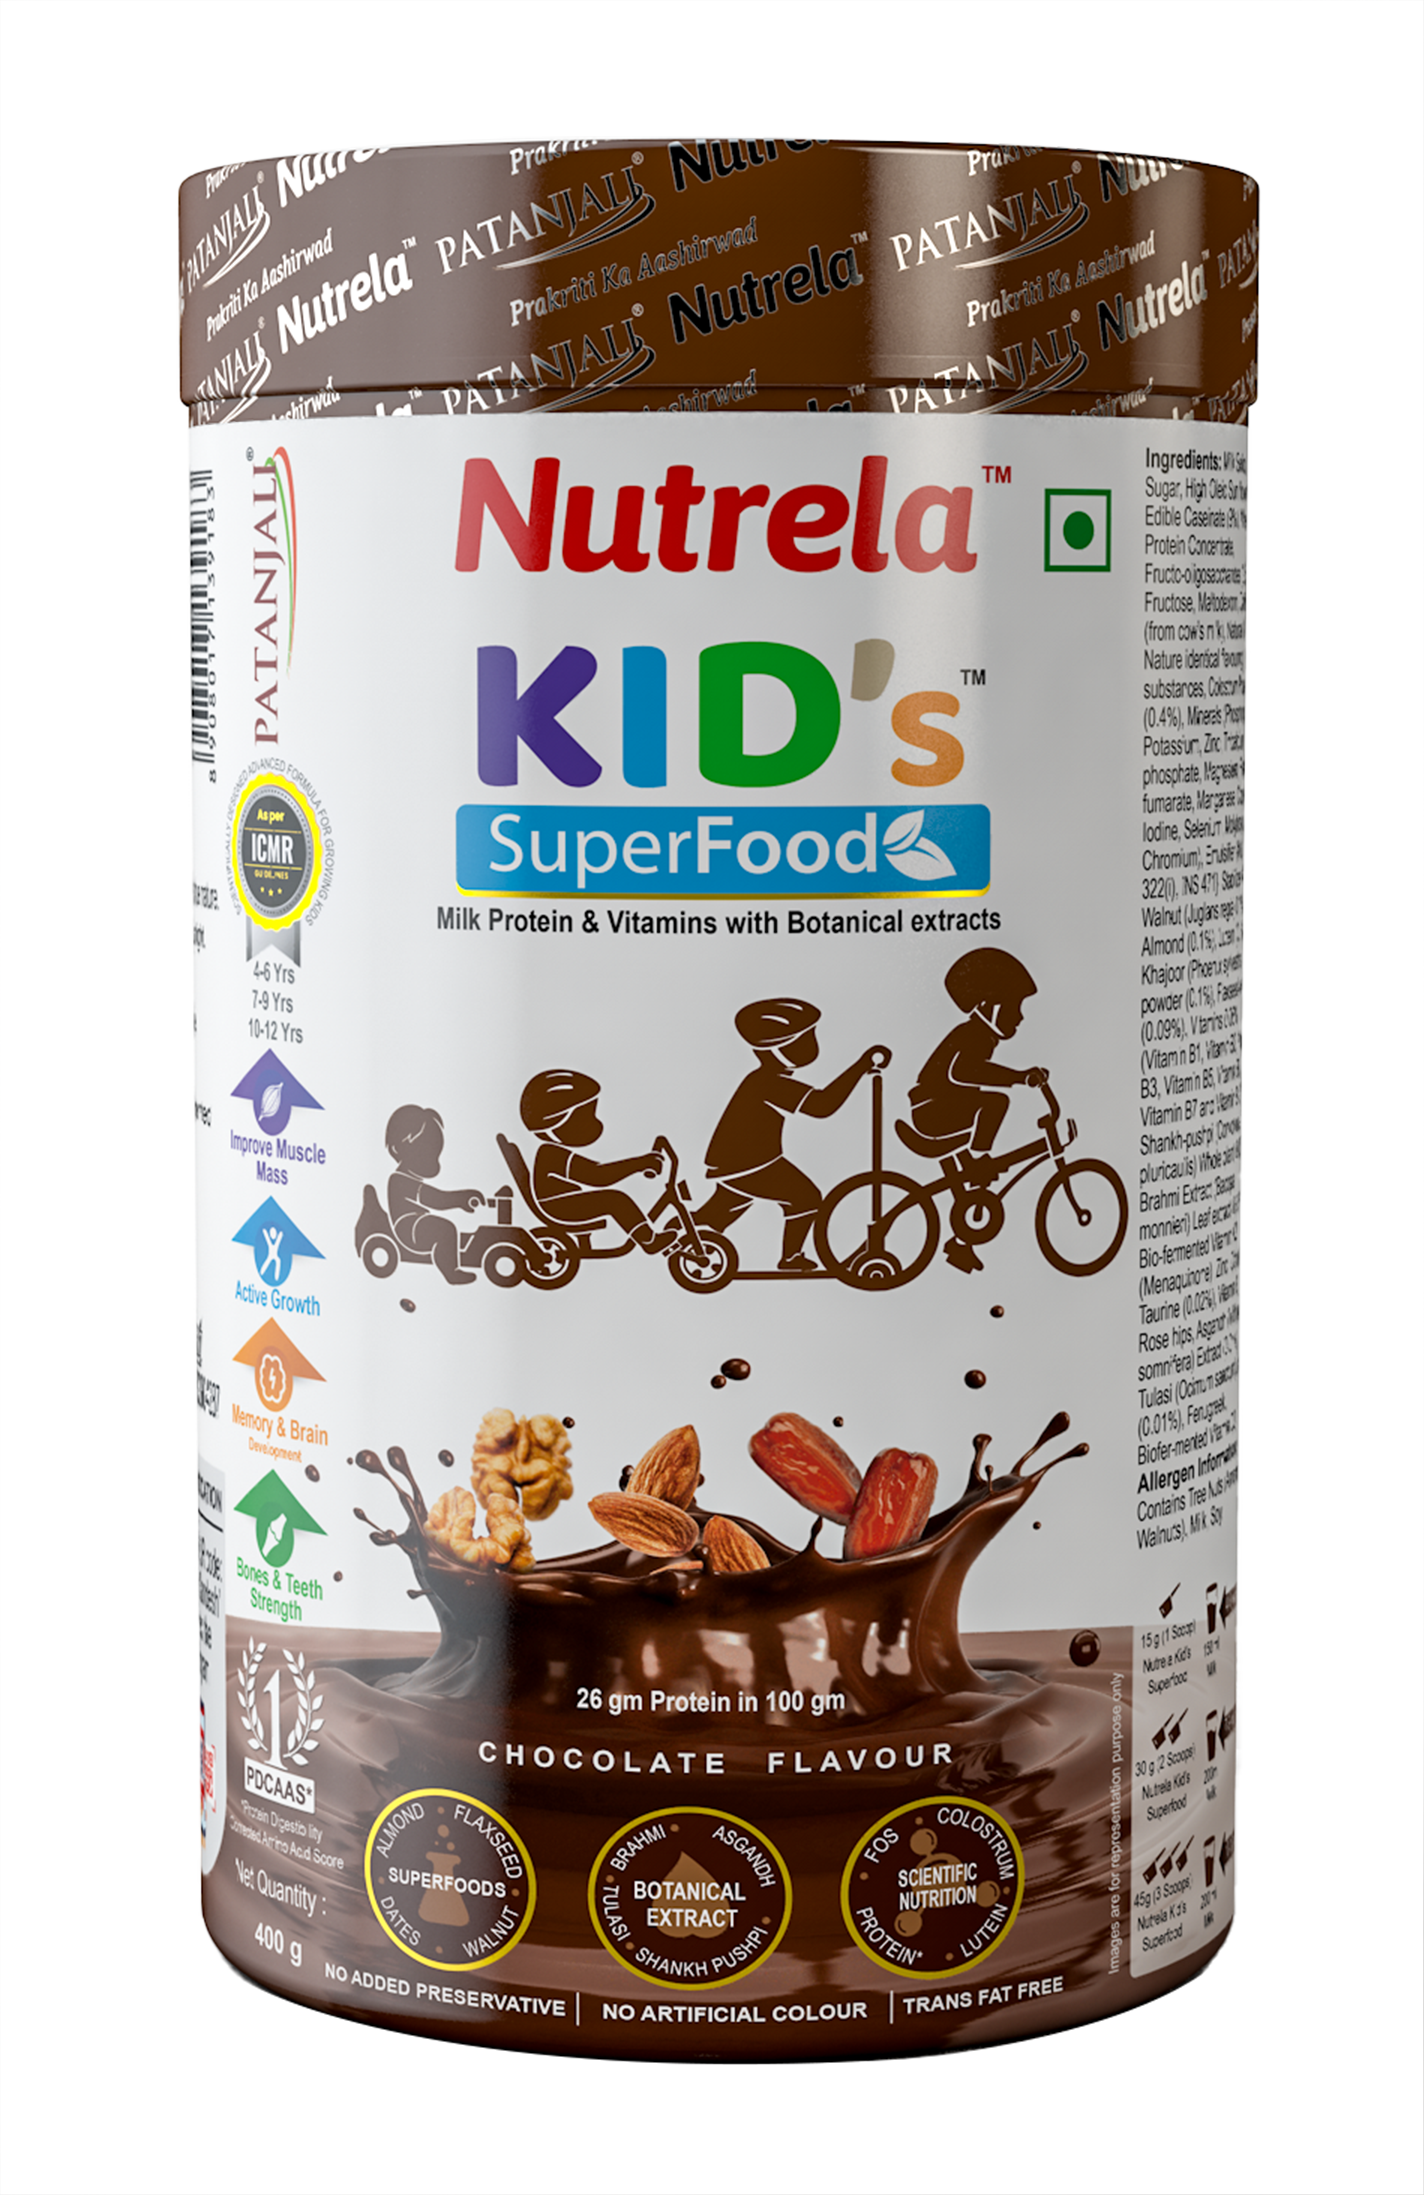 Buy Patanjali Nutrela Kids Superfood at Best Price Online